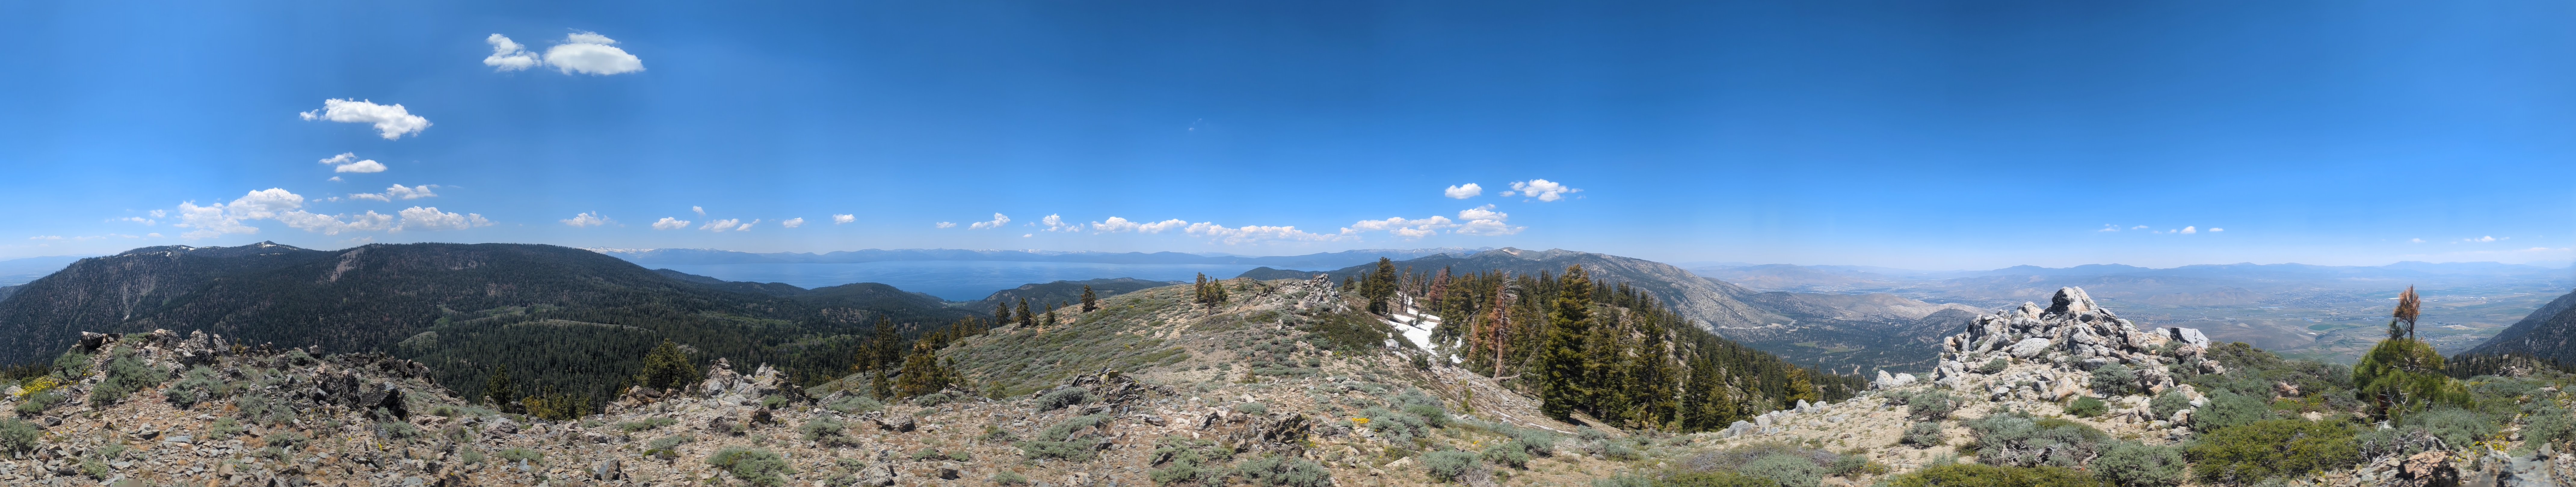 Duane Bliss Peak summit panorama